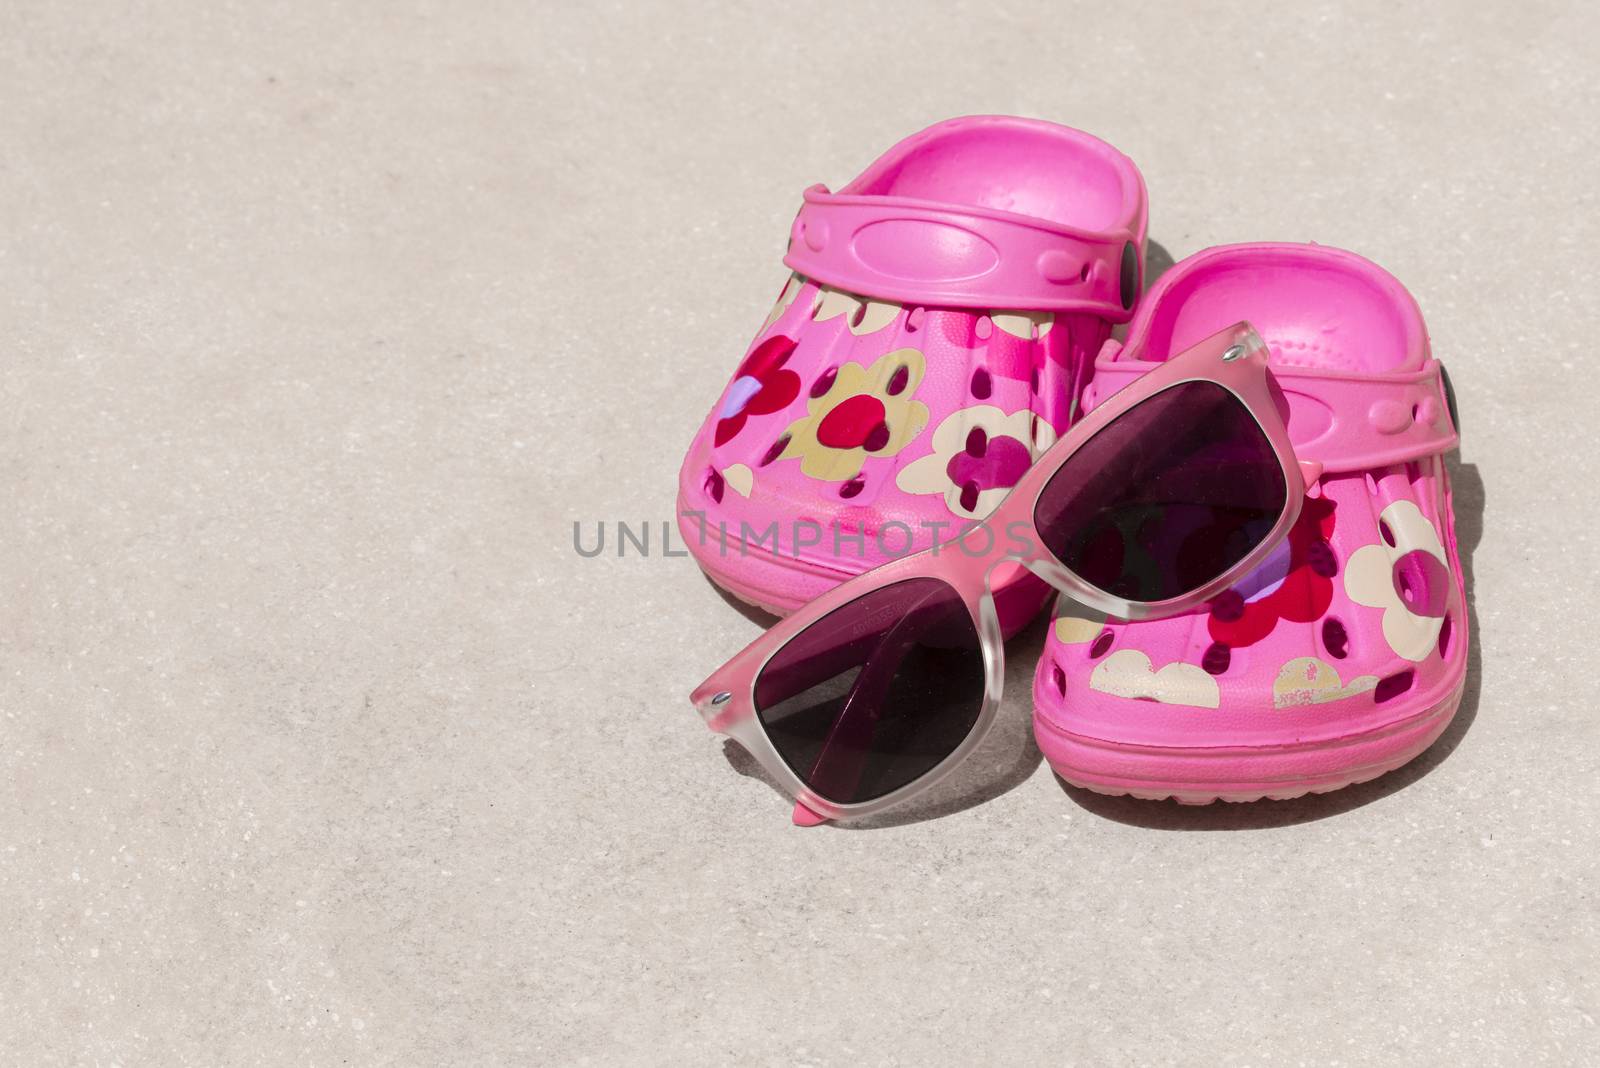 Pink beach kid's crocs / sandals and sunglasses on sandy beach. by asafaric